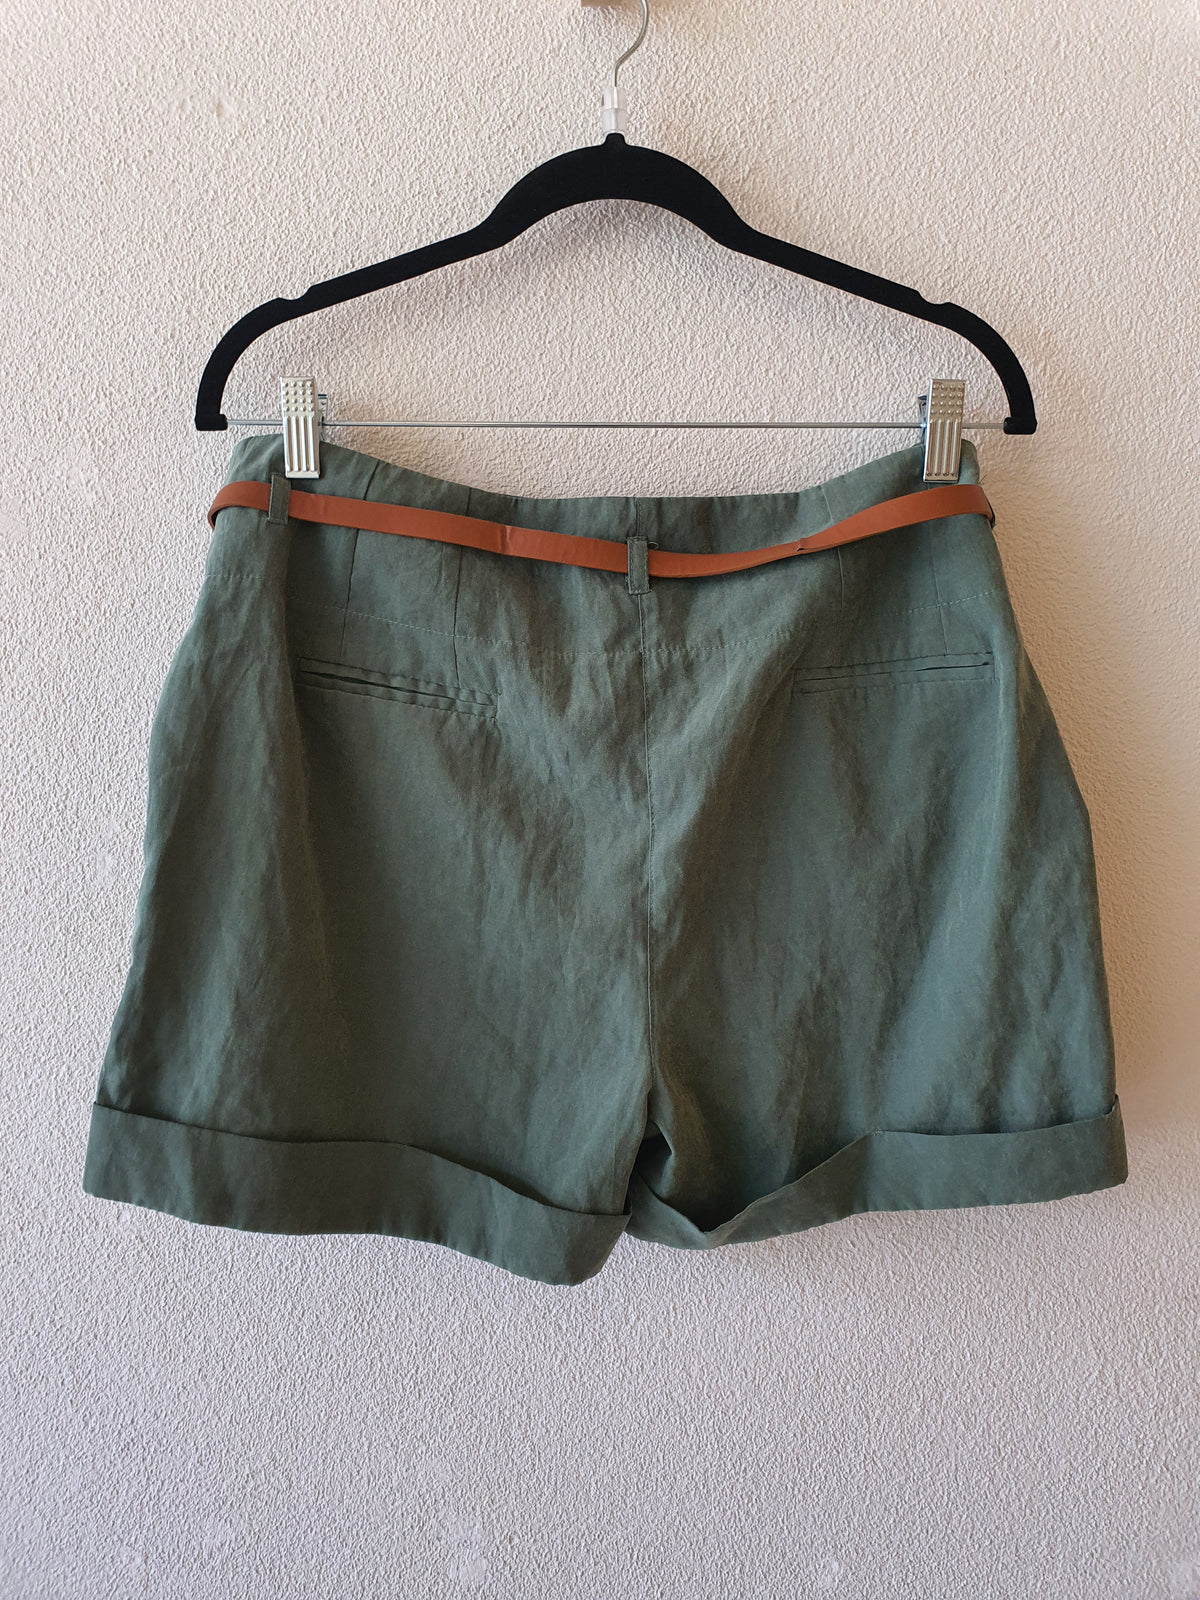 Chicabooti Green Shorts w/ Belt 14